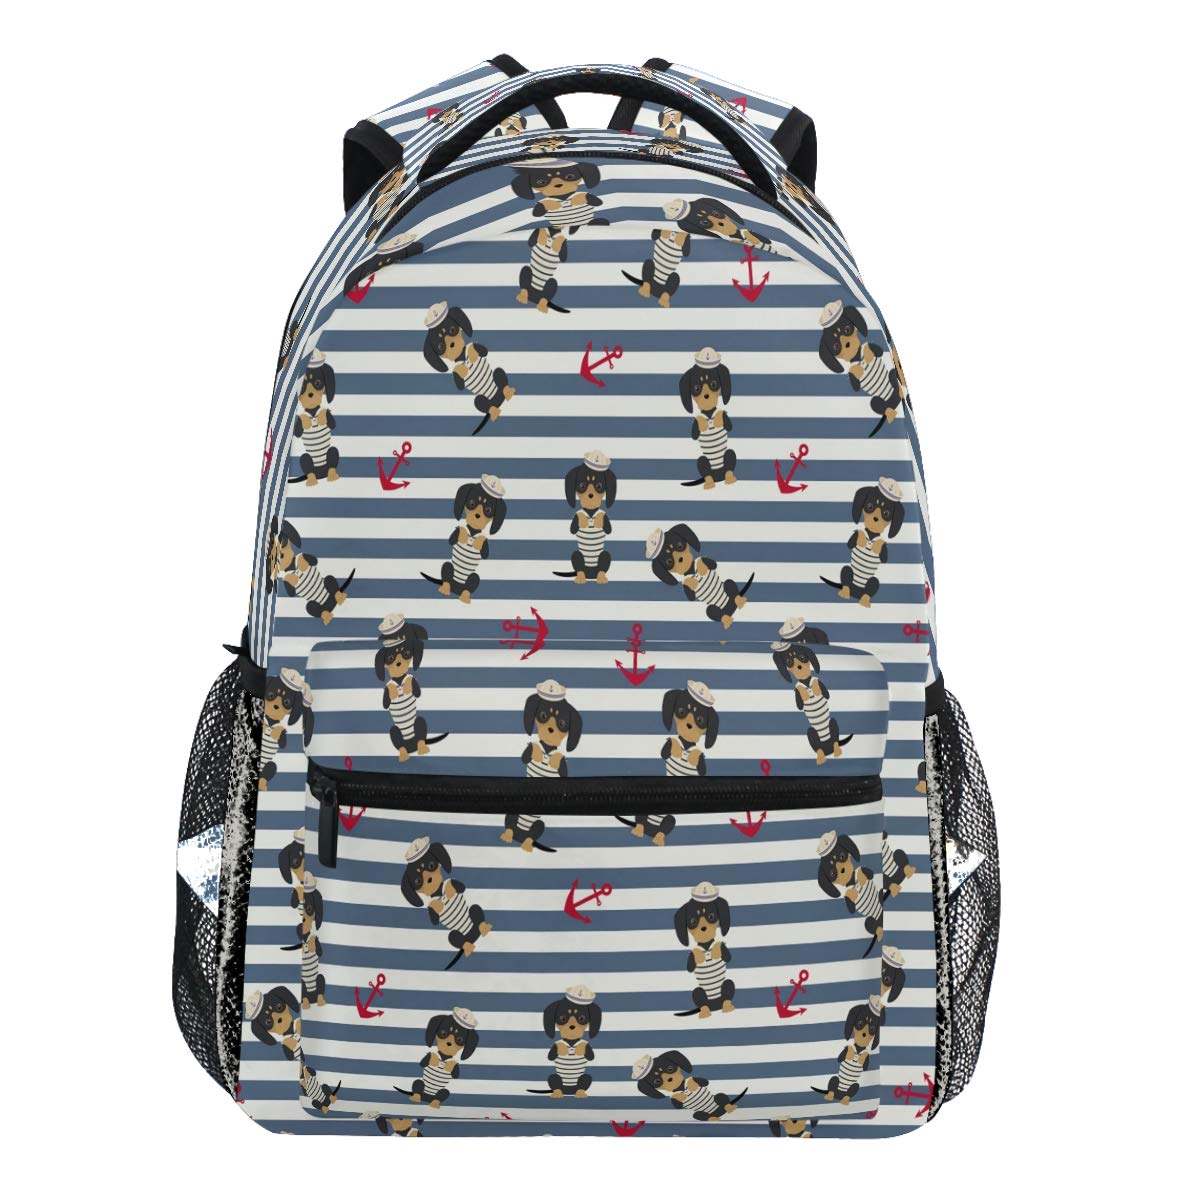 Oarencol Rucksack Dackel Welpe Sailorman Anchor Stripe Funny Dog Backpack Bookbag Daypack Travel School College Bag für Damen Herren Mädchen Jungen